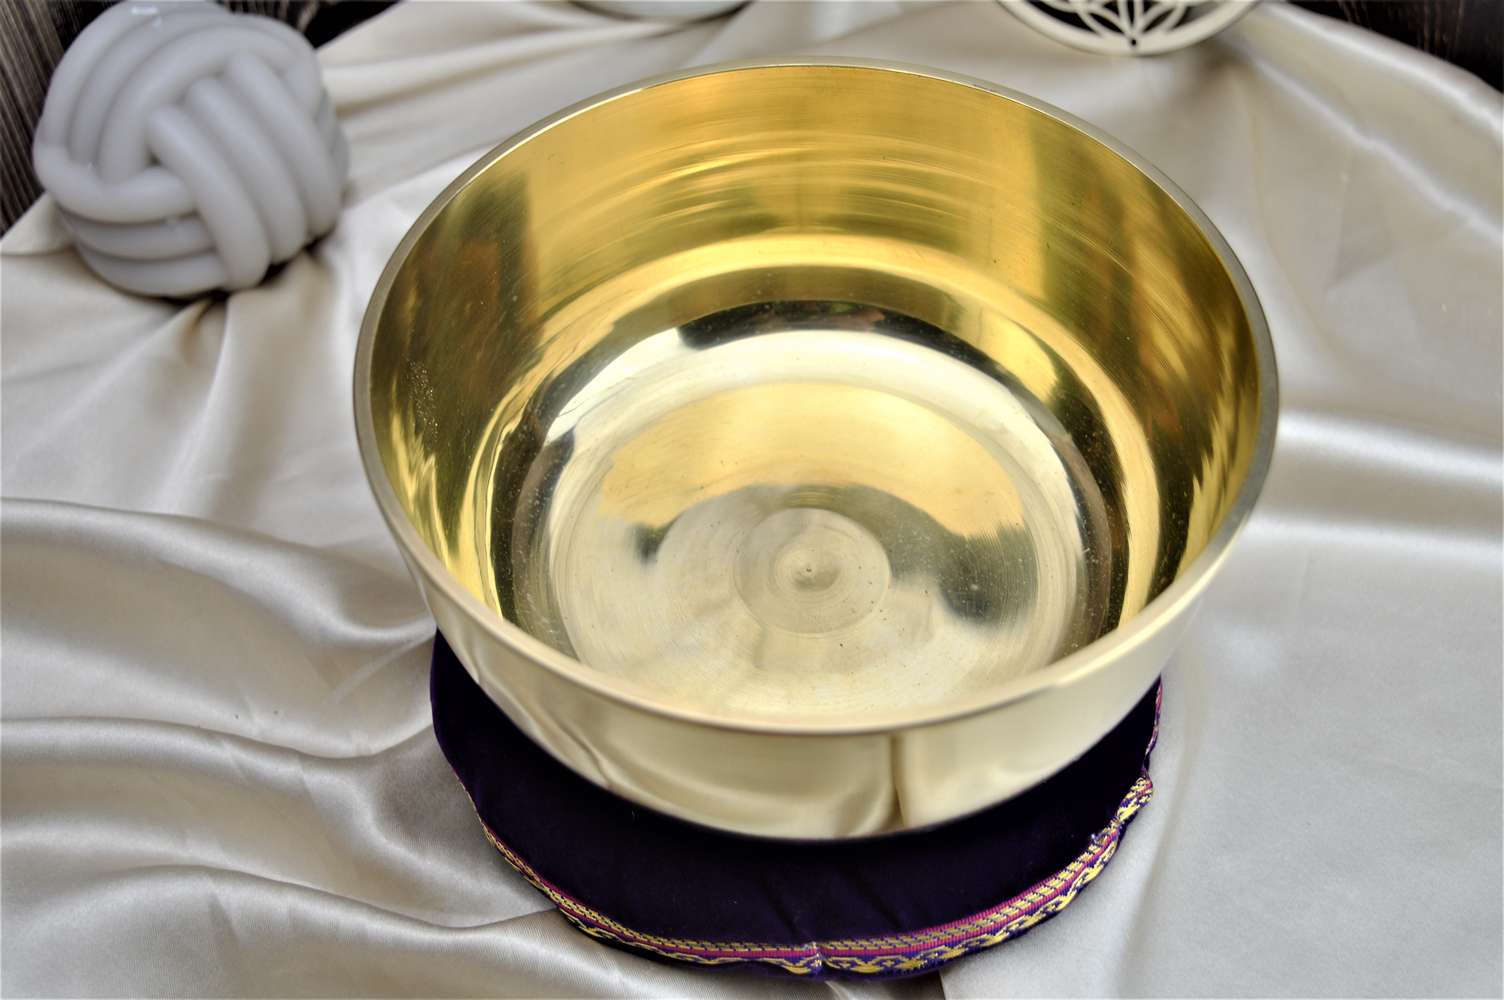 Mosadzná Tibetská spievajúca miska 17cm 1,1kg + gong a vankúšik